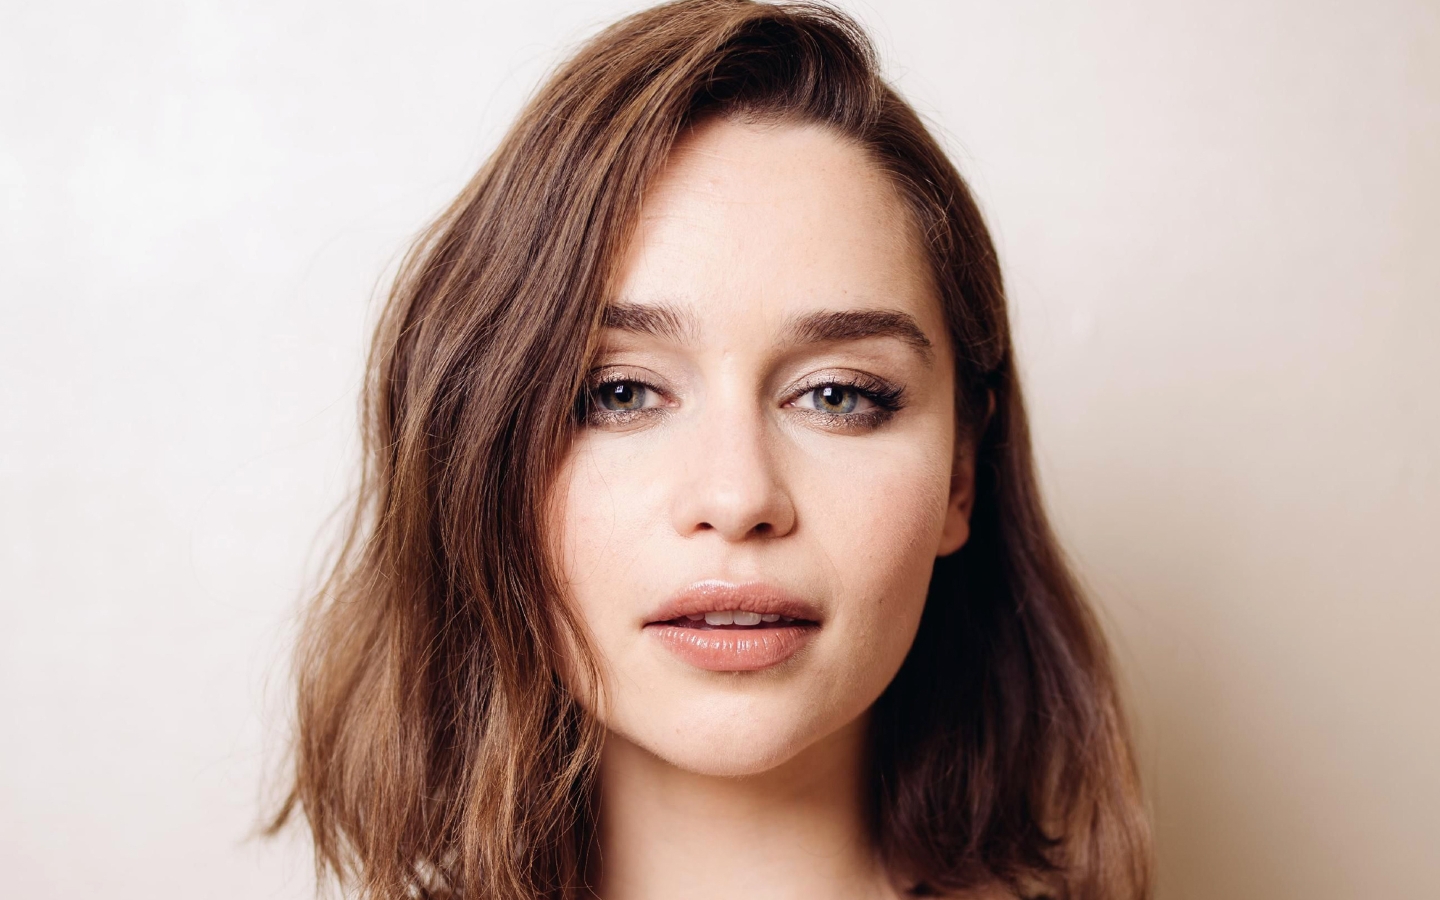 Emilia Clarke Cute Face for 1440 x 900 widescreen resolution